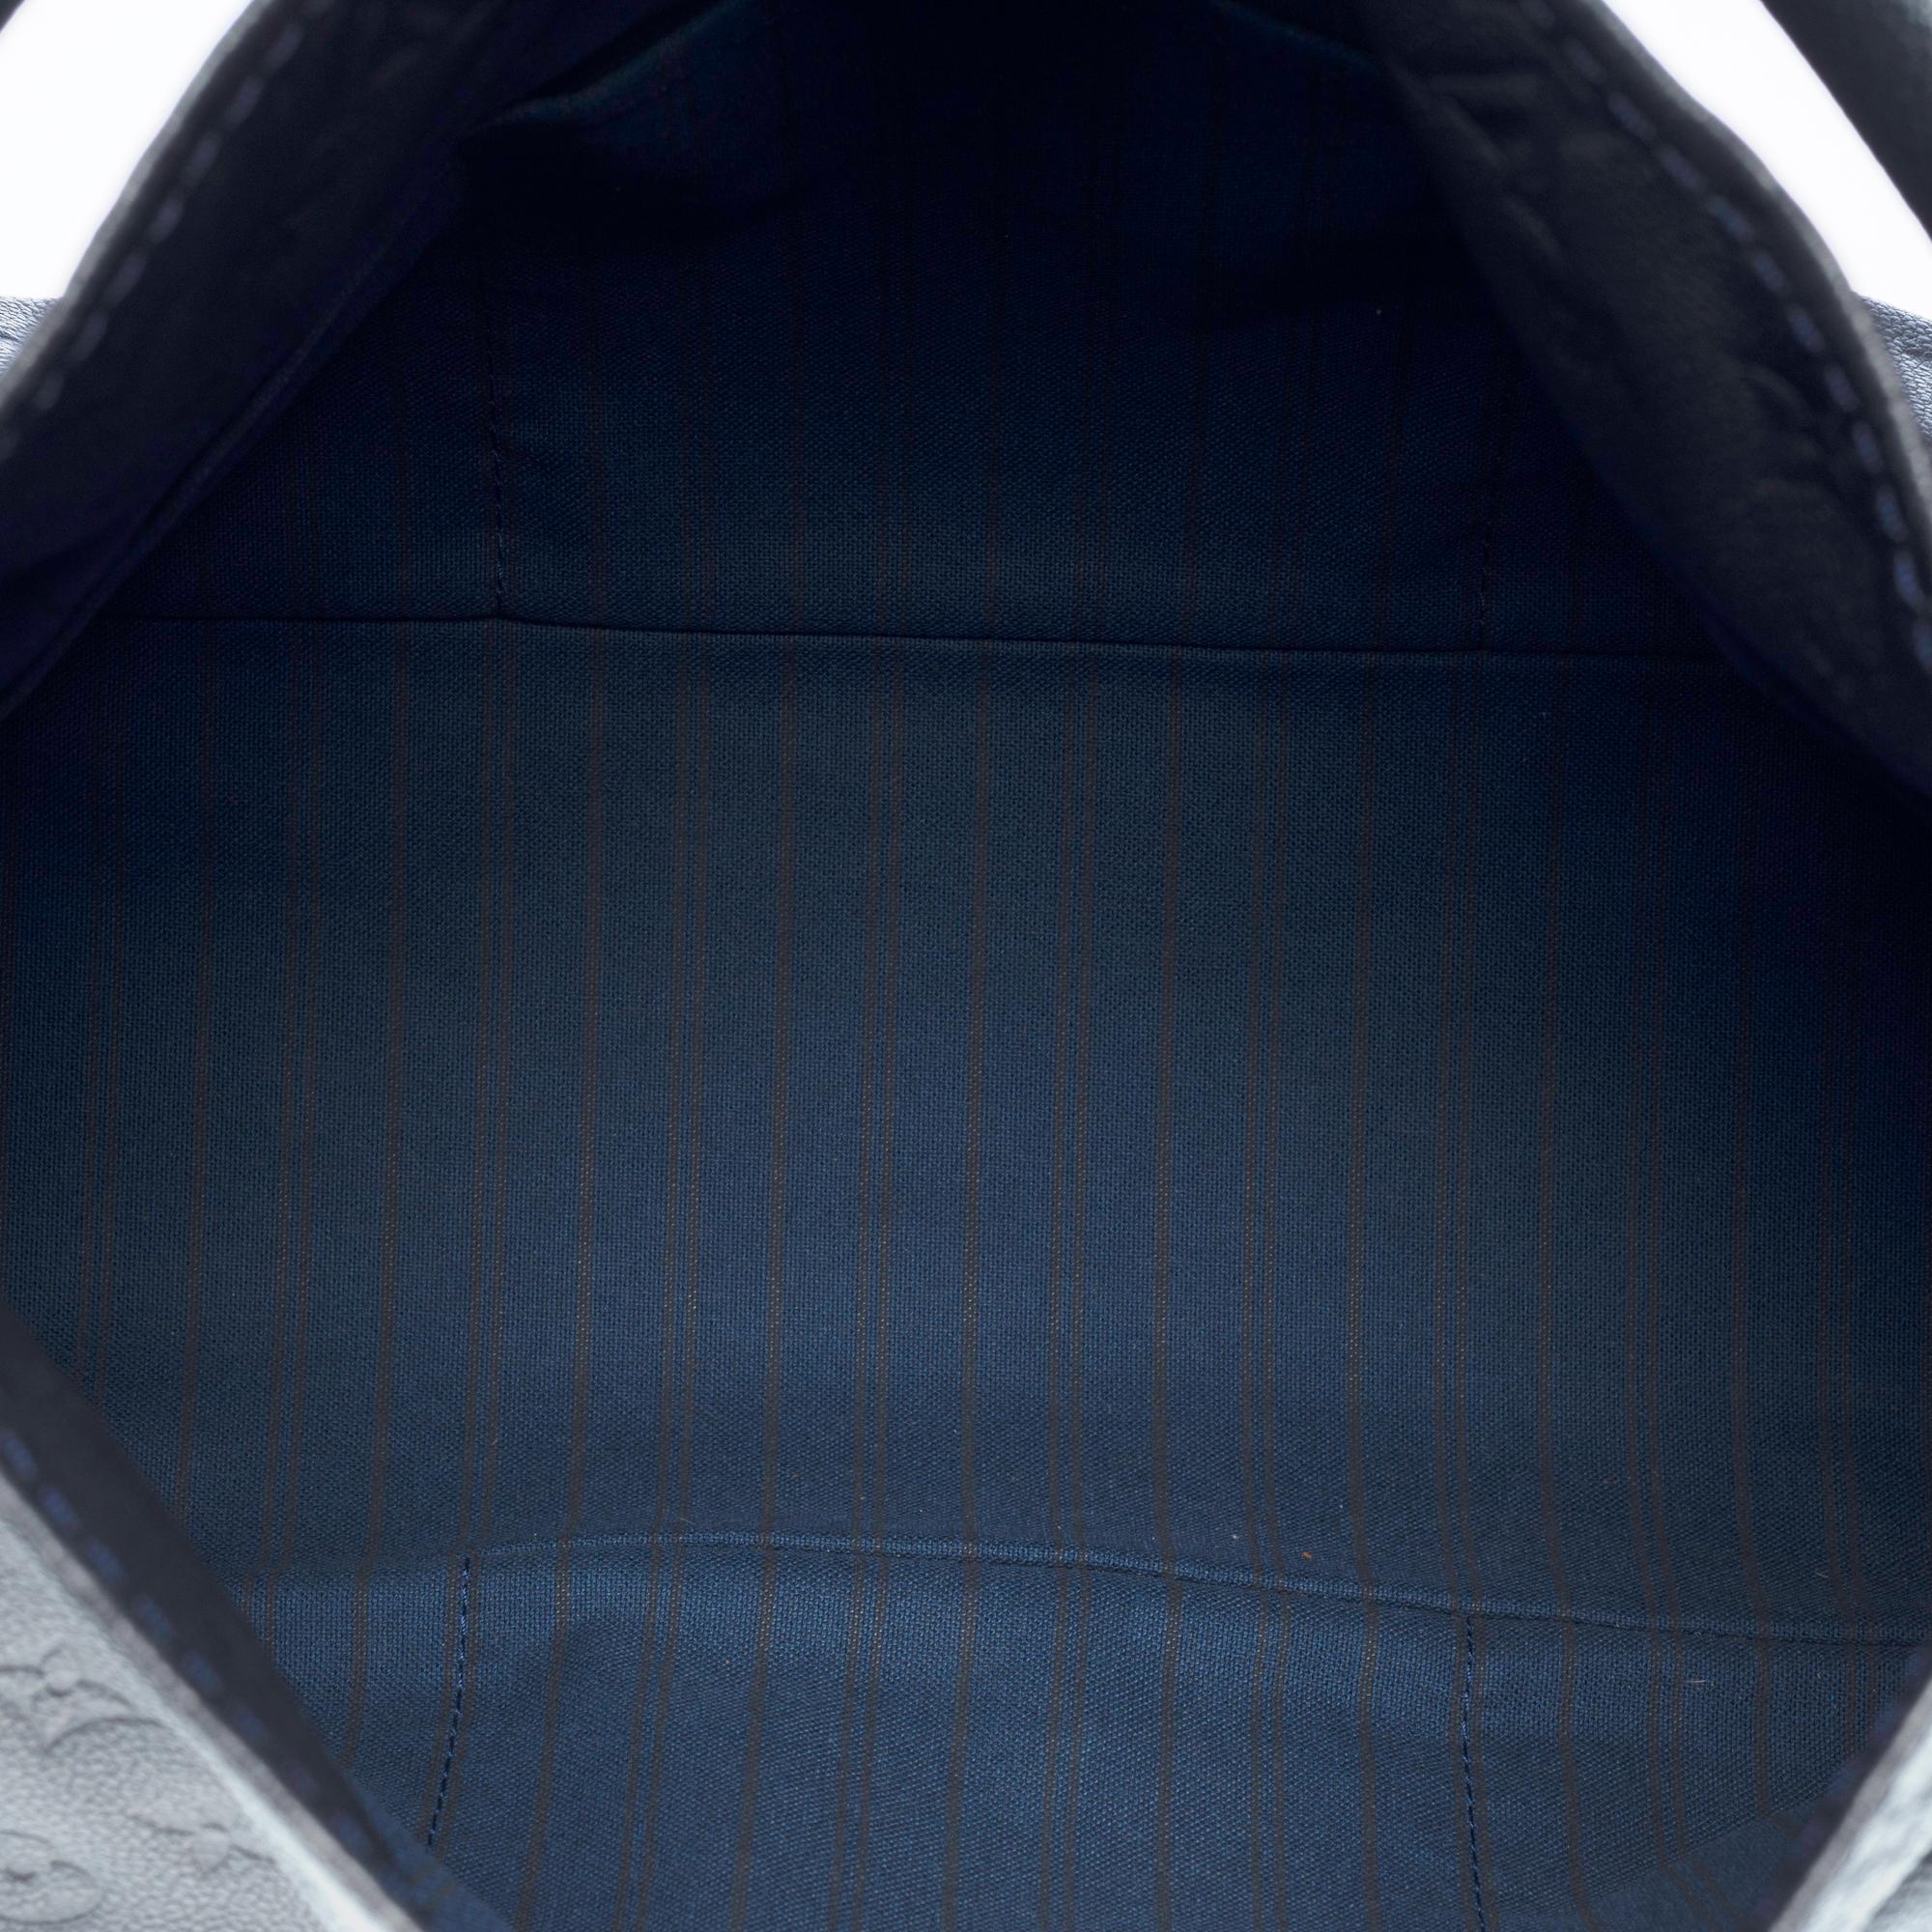 Louis Vuitton Artsy MM Hobo bag in dark blue monogram calfskin leather, GHW 3